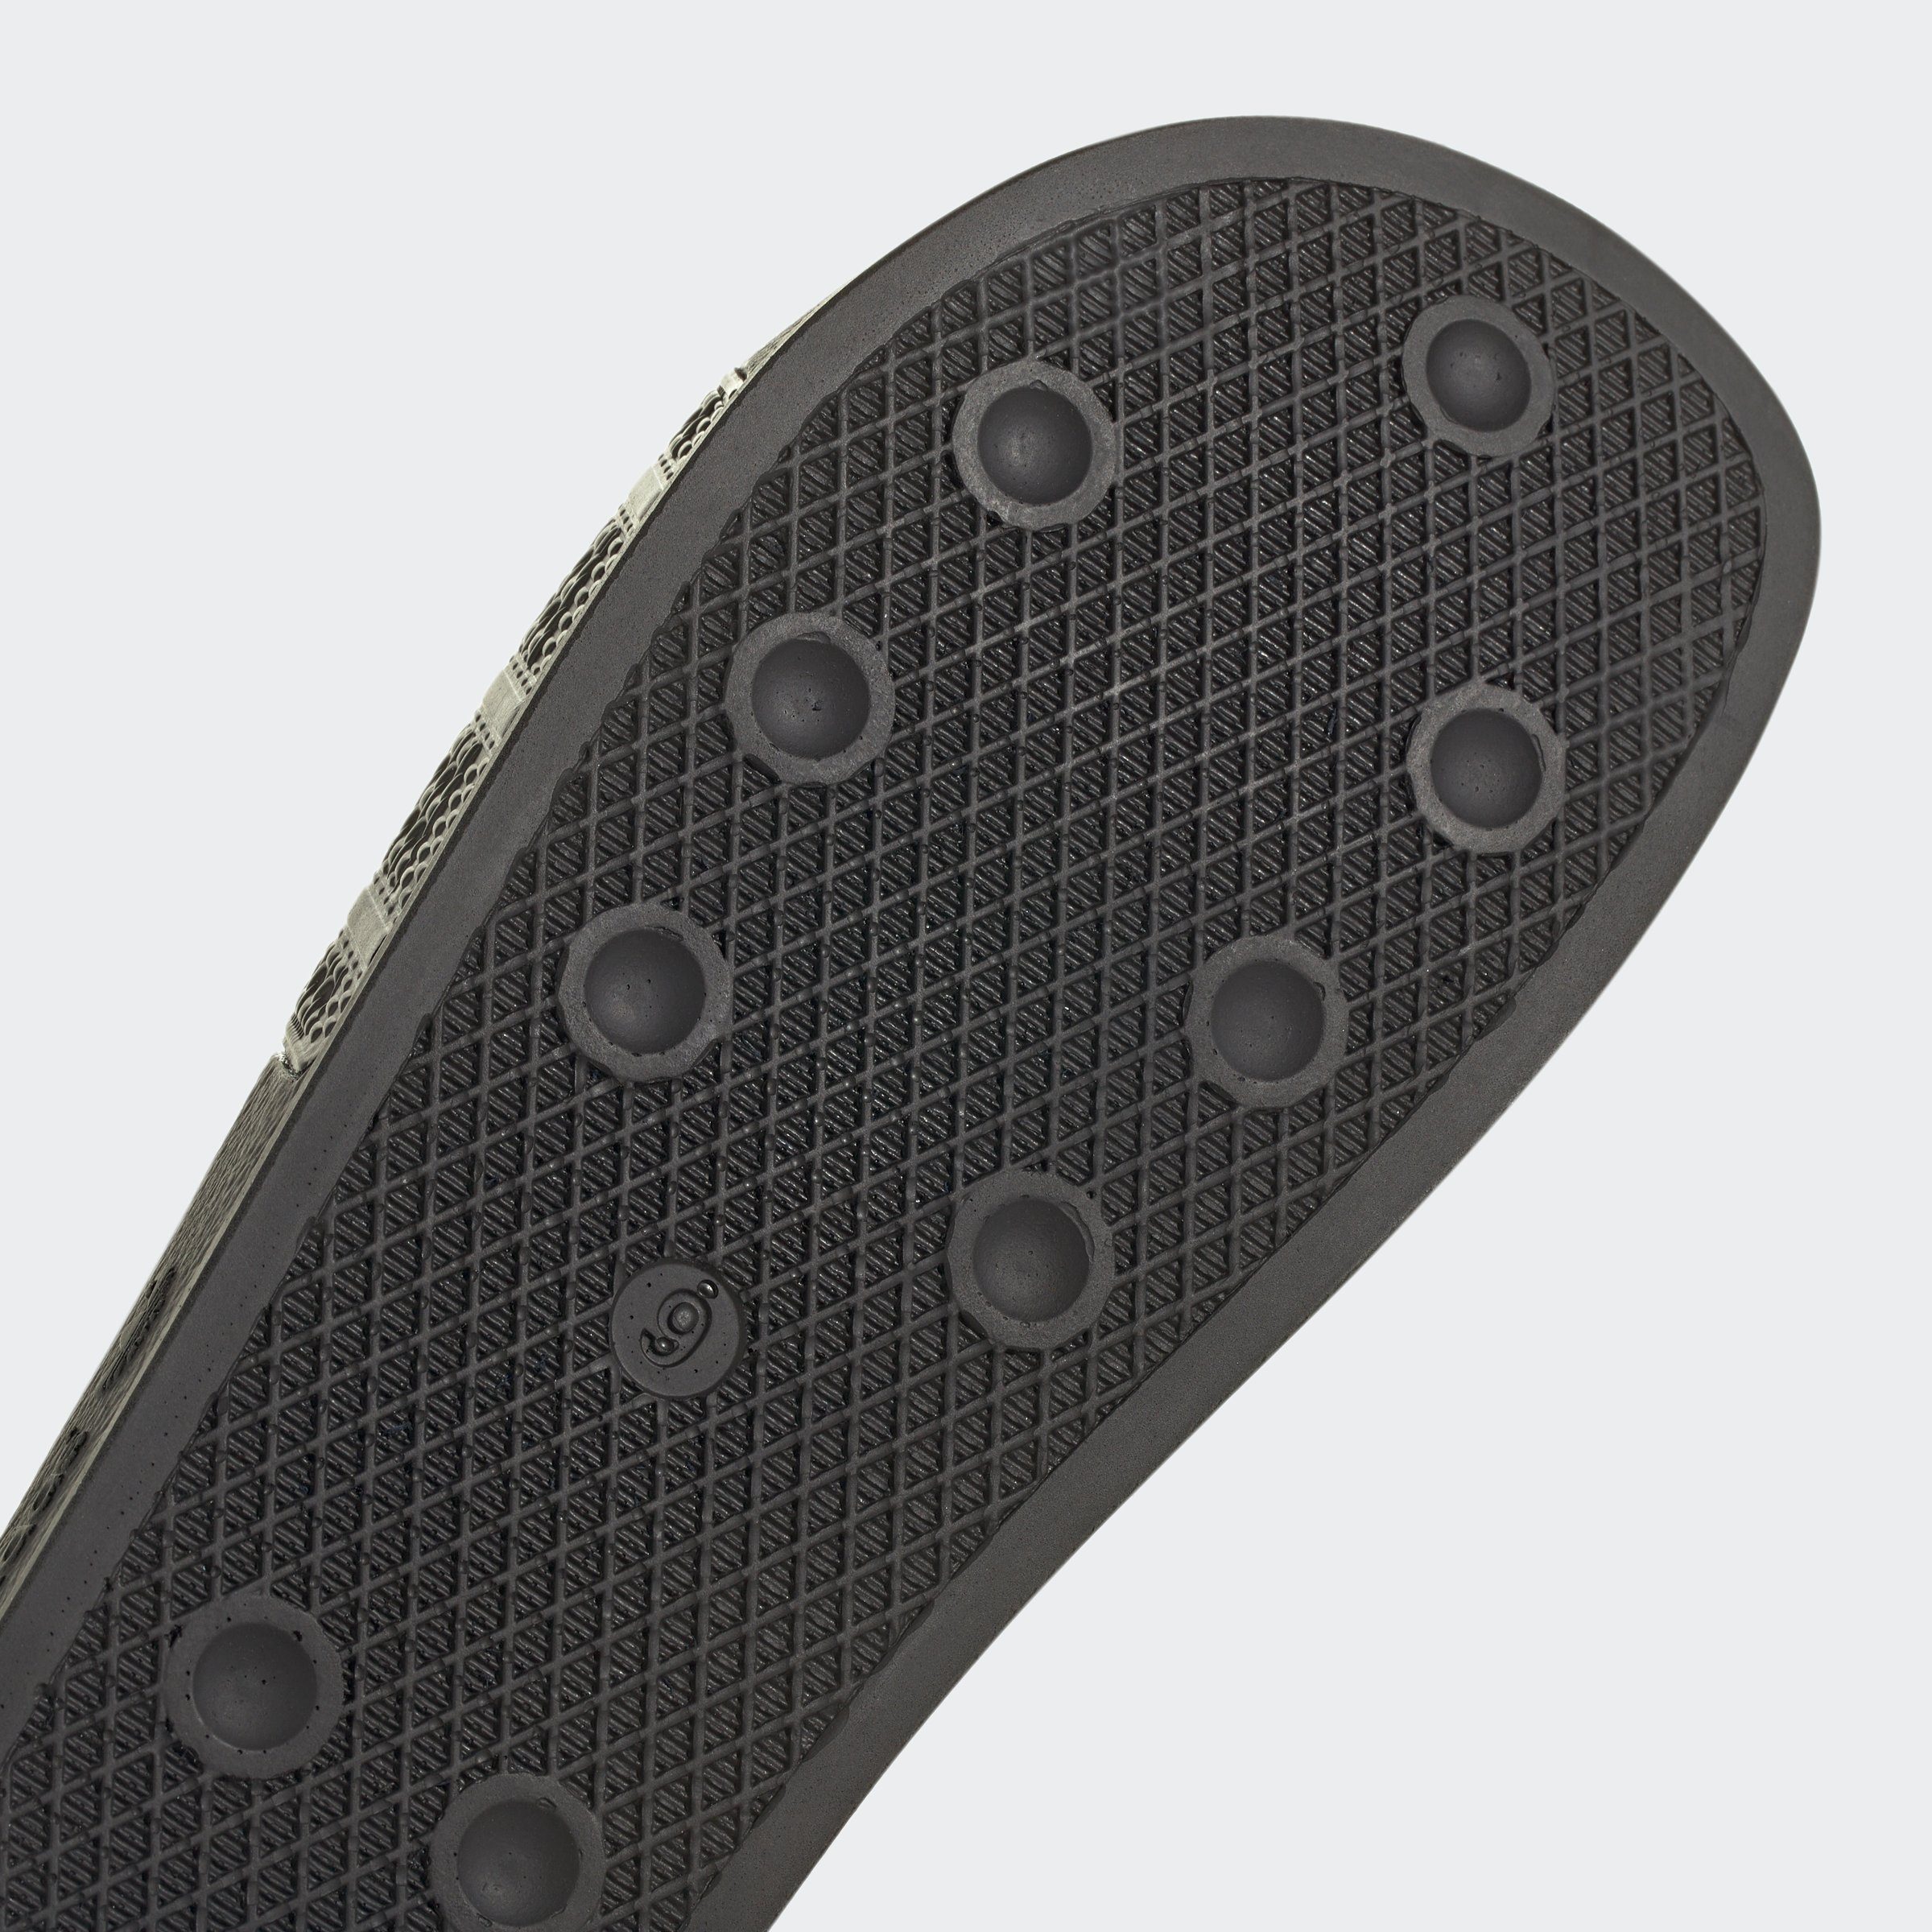 adidas Originals ADILETTE Badesandale Core Black Core Carbon Black / 